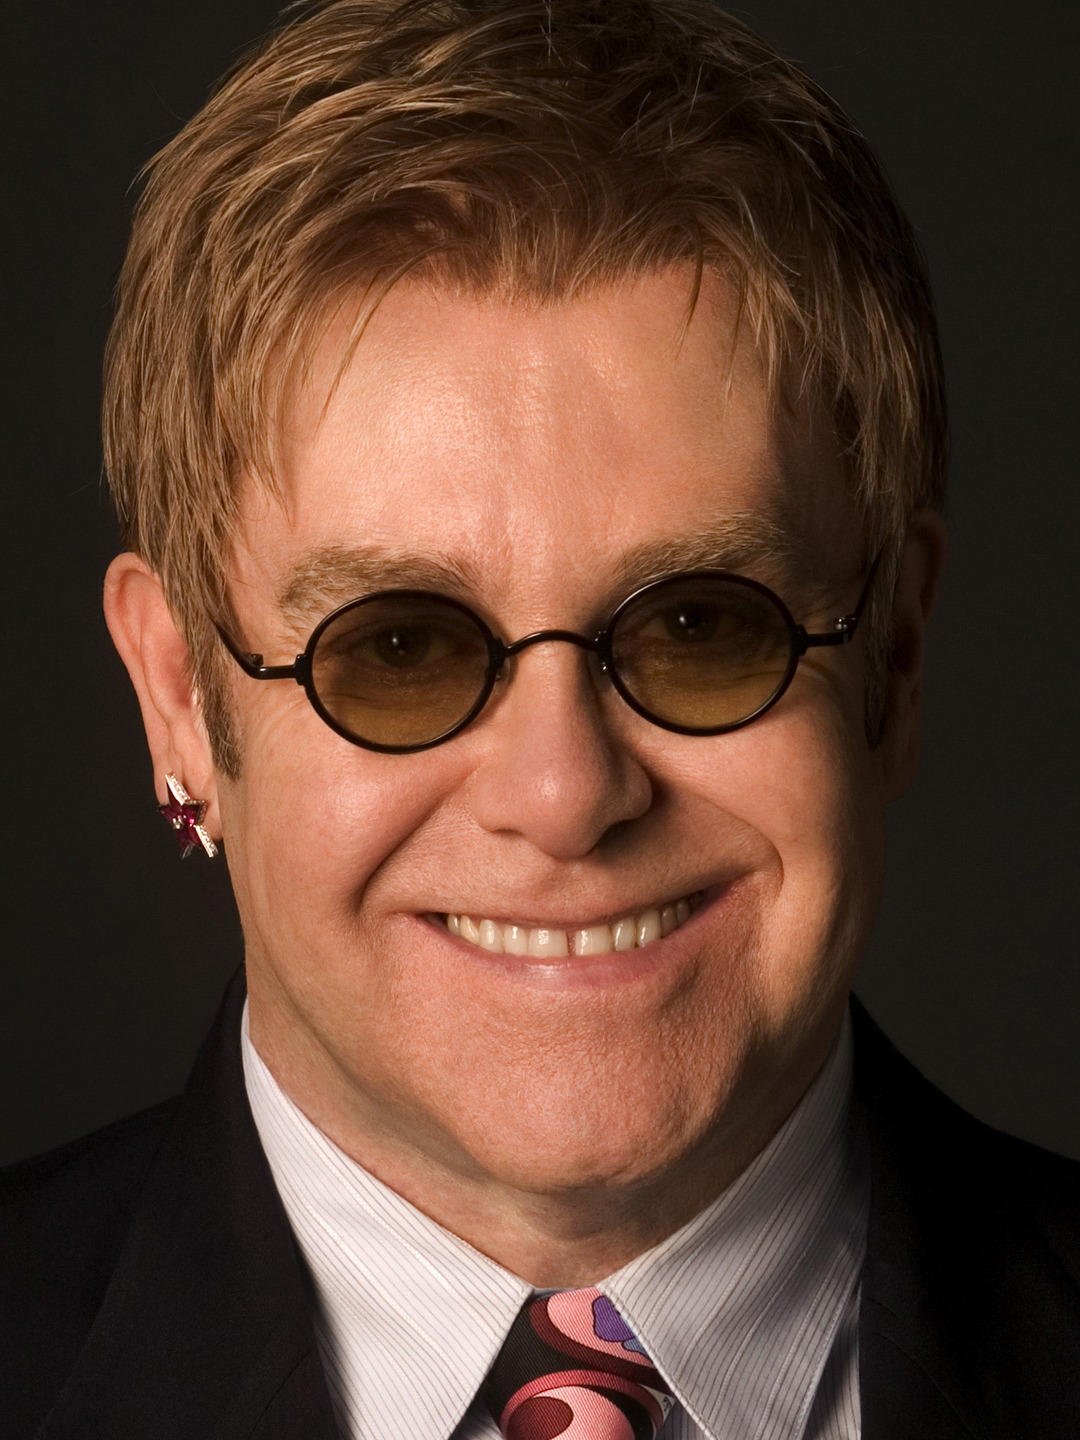 Elton John current look